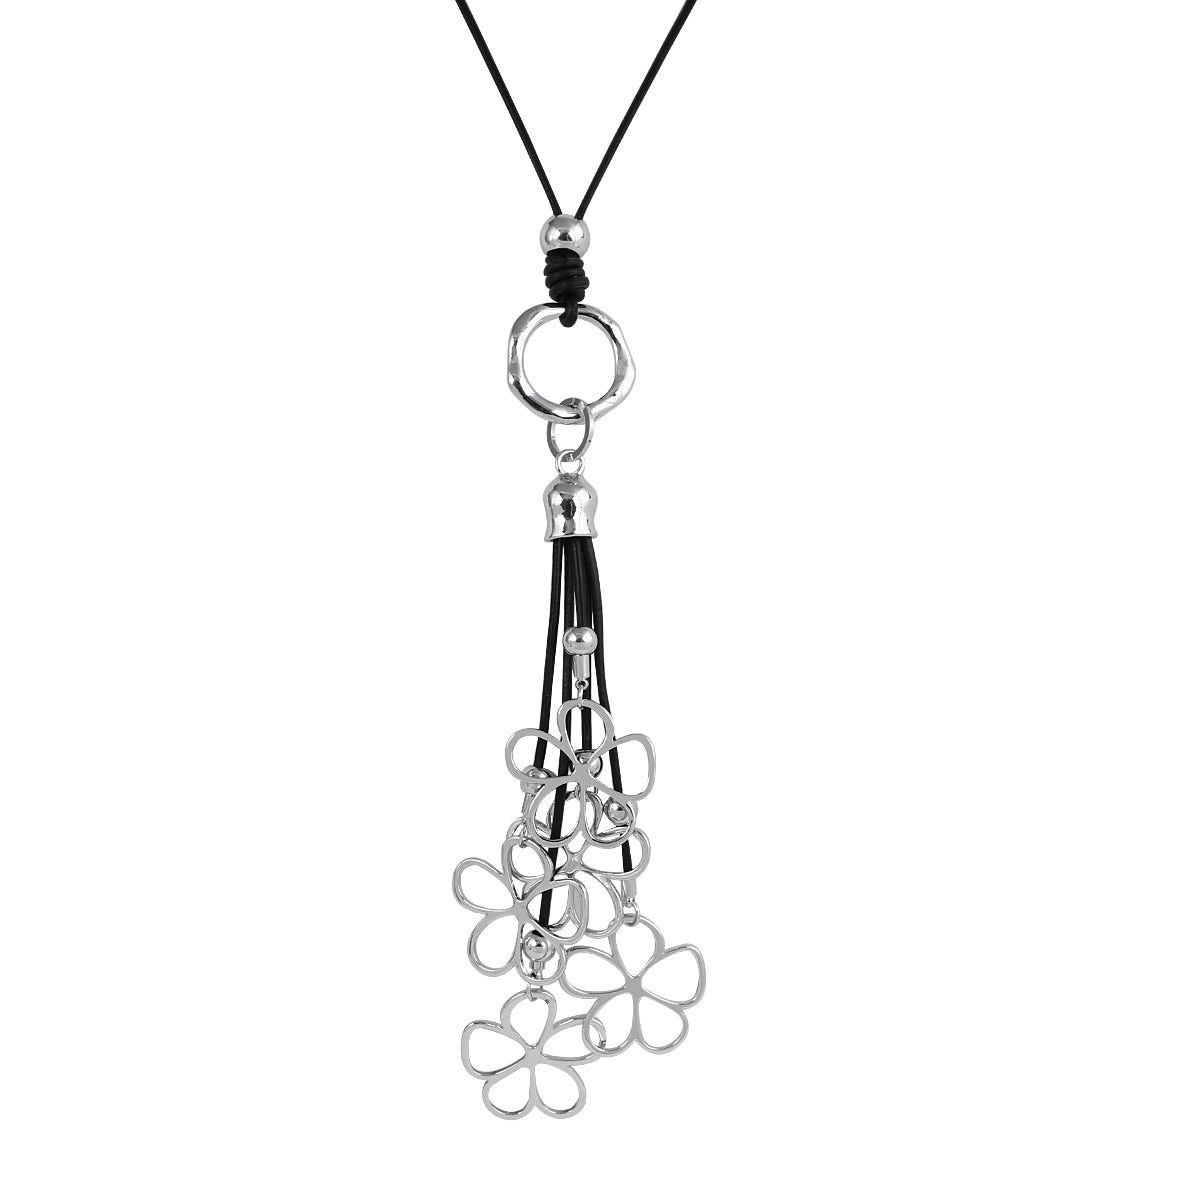 Silver Flower Tassel Pendant Long Leather Boho Necklace